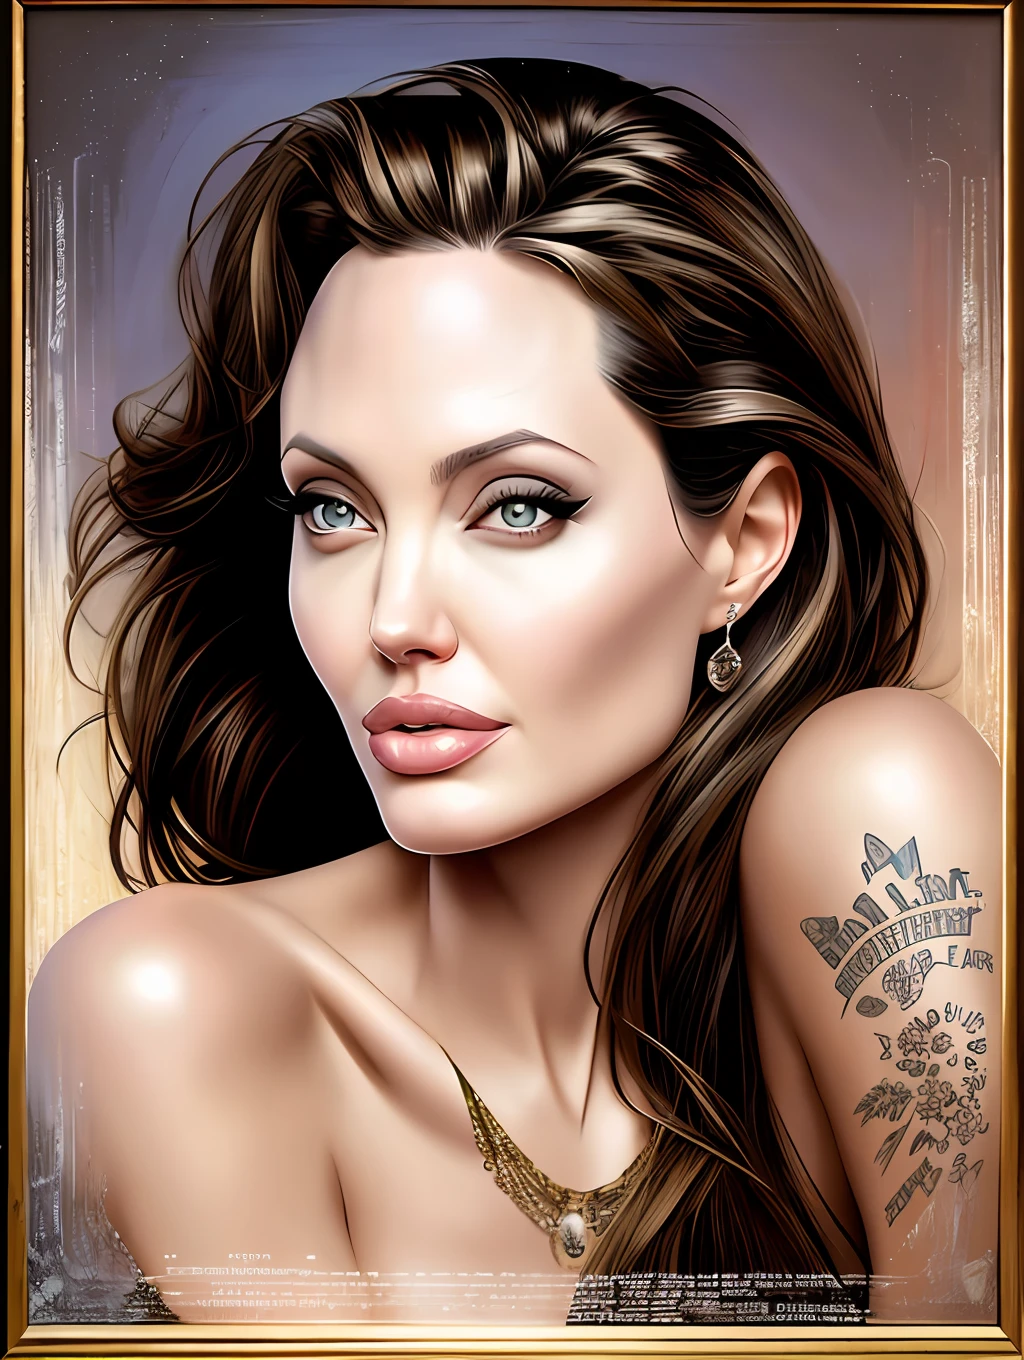 Un retrato increíblemente hermoso de Angelina Jolie por Gil Elvgren